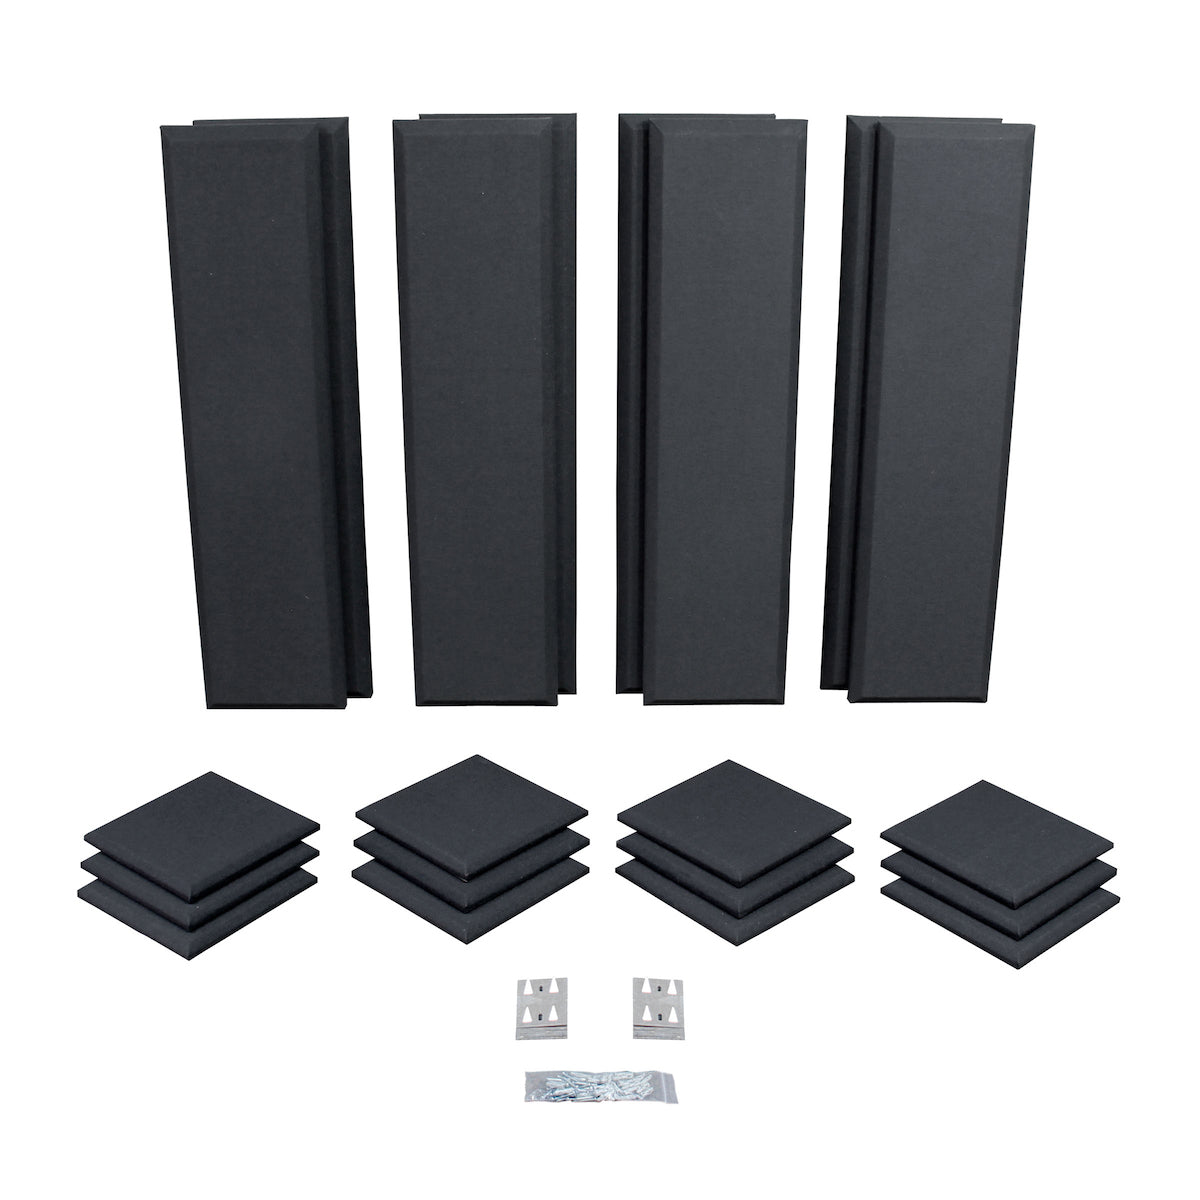 Primacoustic London 10 - Acoustic Panel Room Kit, black